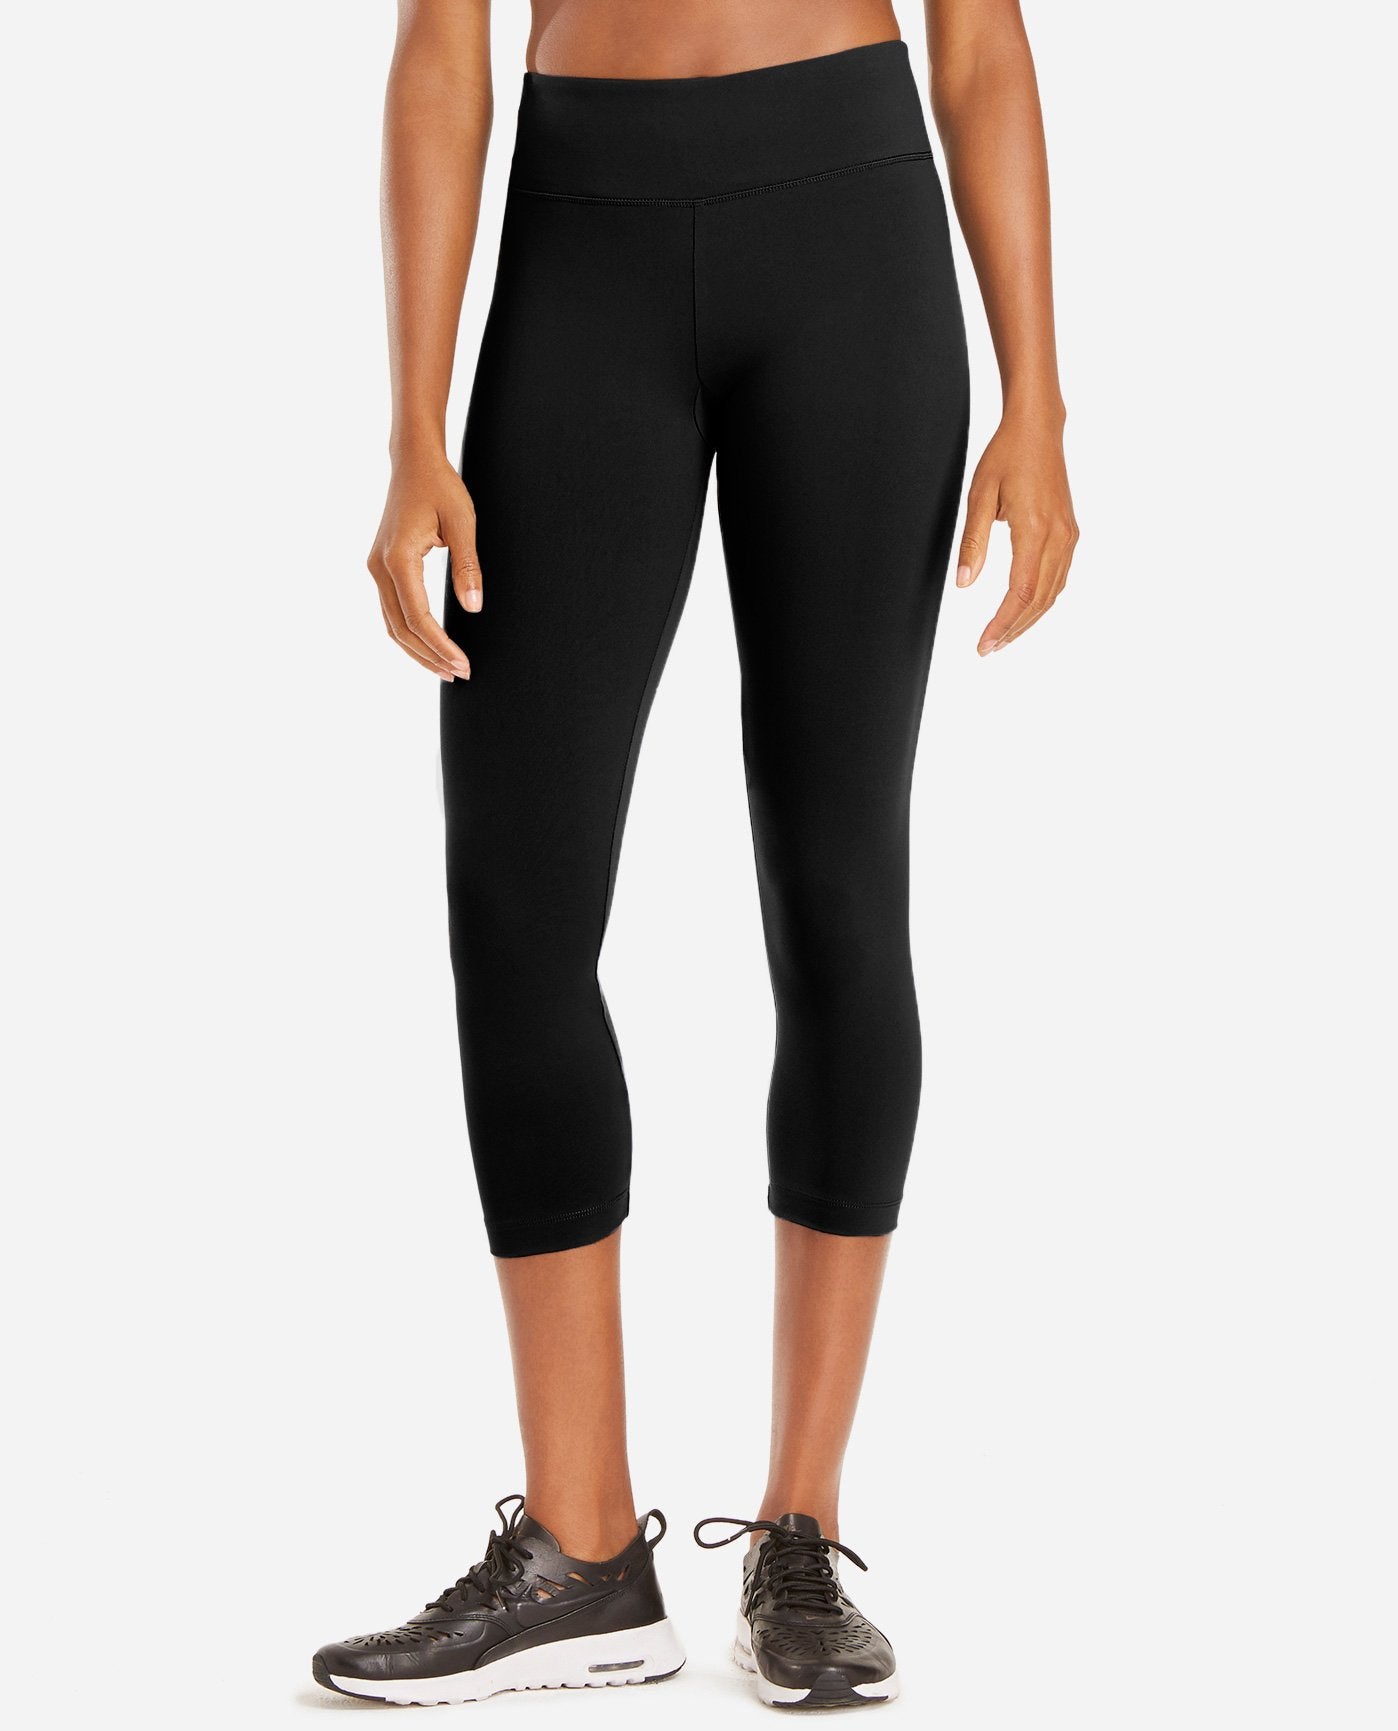 Danskin Now Women's Active Sport Leggings Gray Size XS - $13